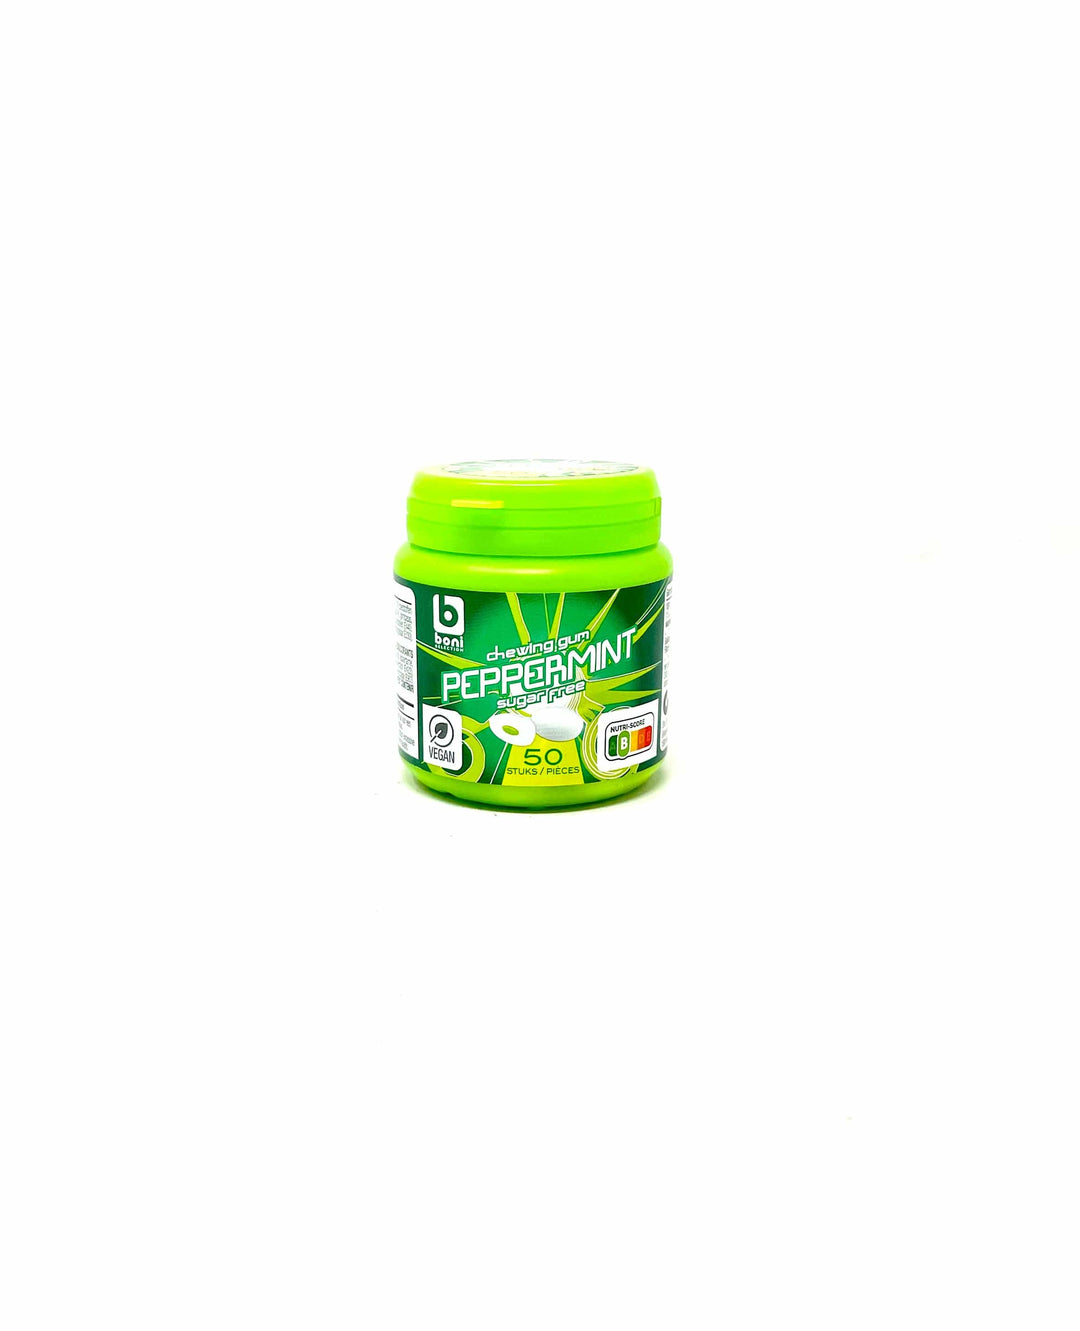 Boni Chewing gum Peppermint 50 pc